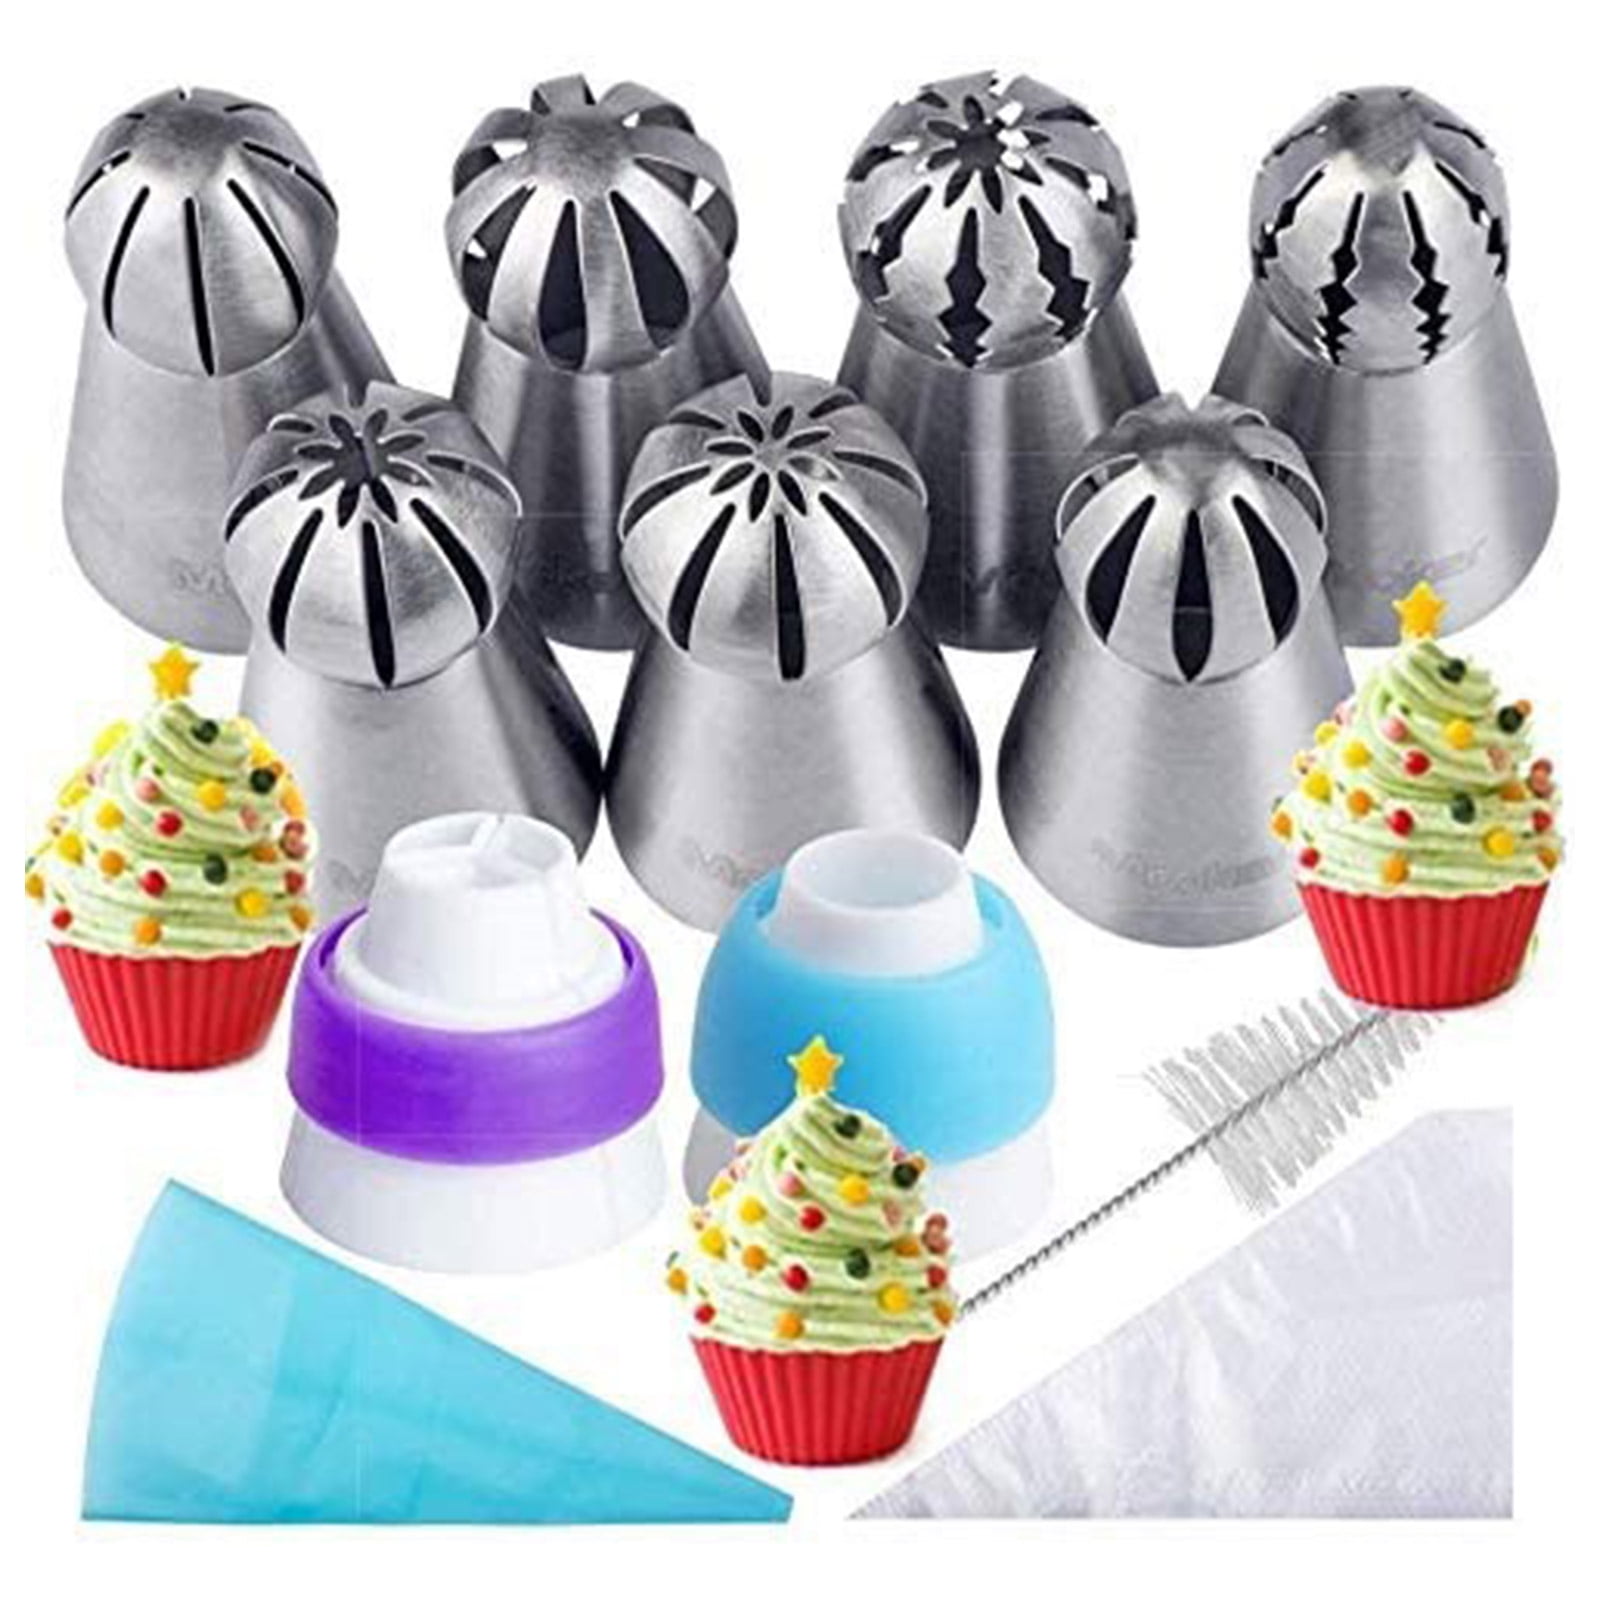 O'Creme Metal-ball Cake Decorating Fondant Gum Paste Modeling Tools, Set of 4